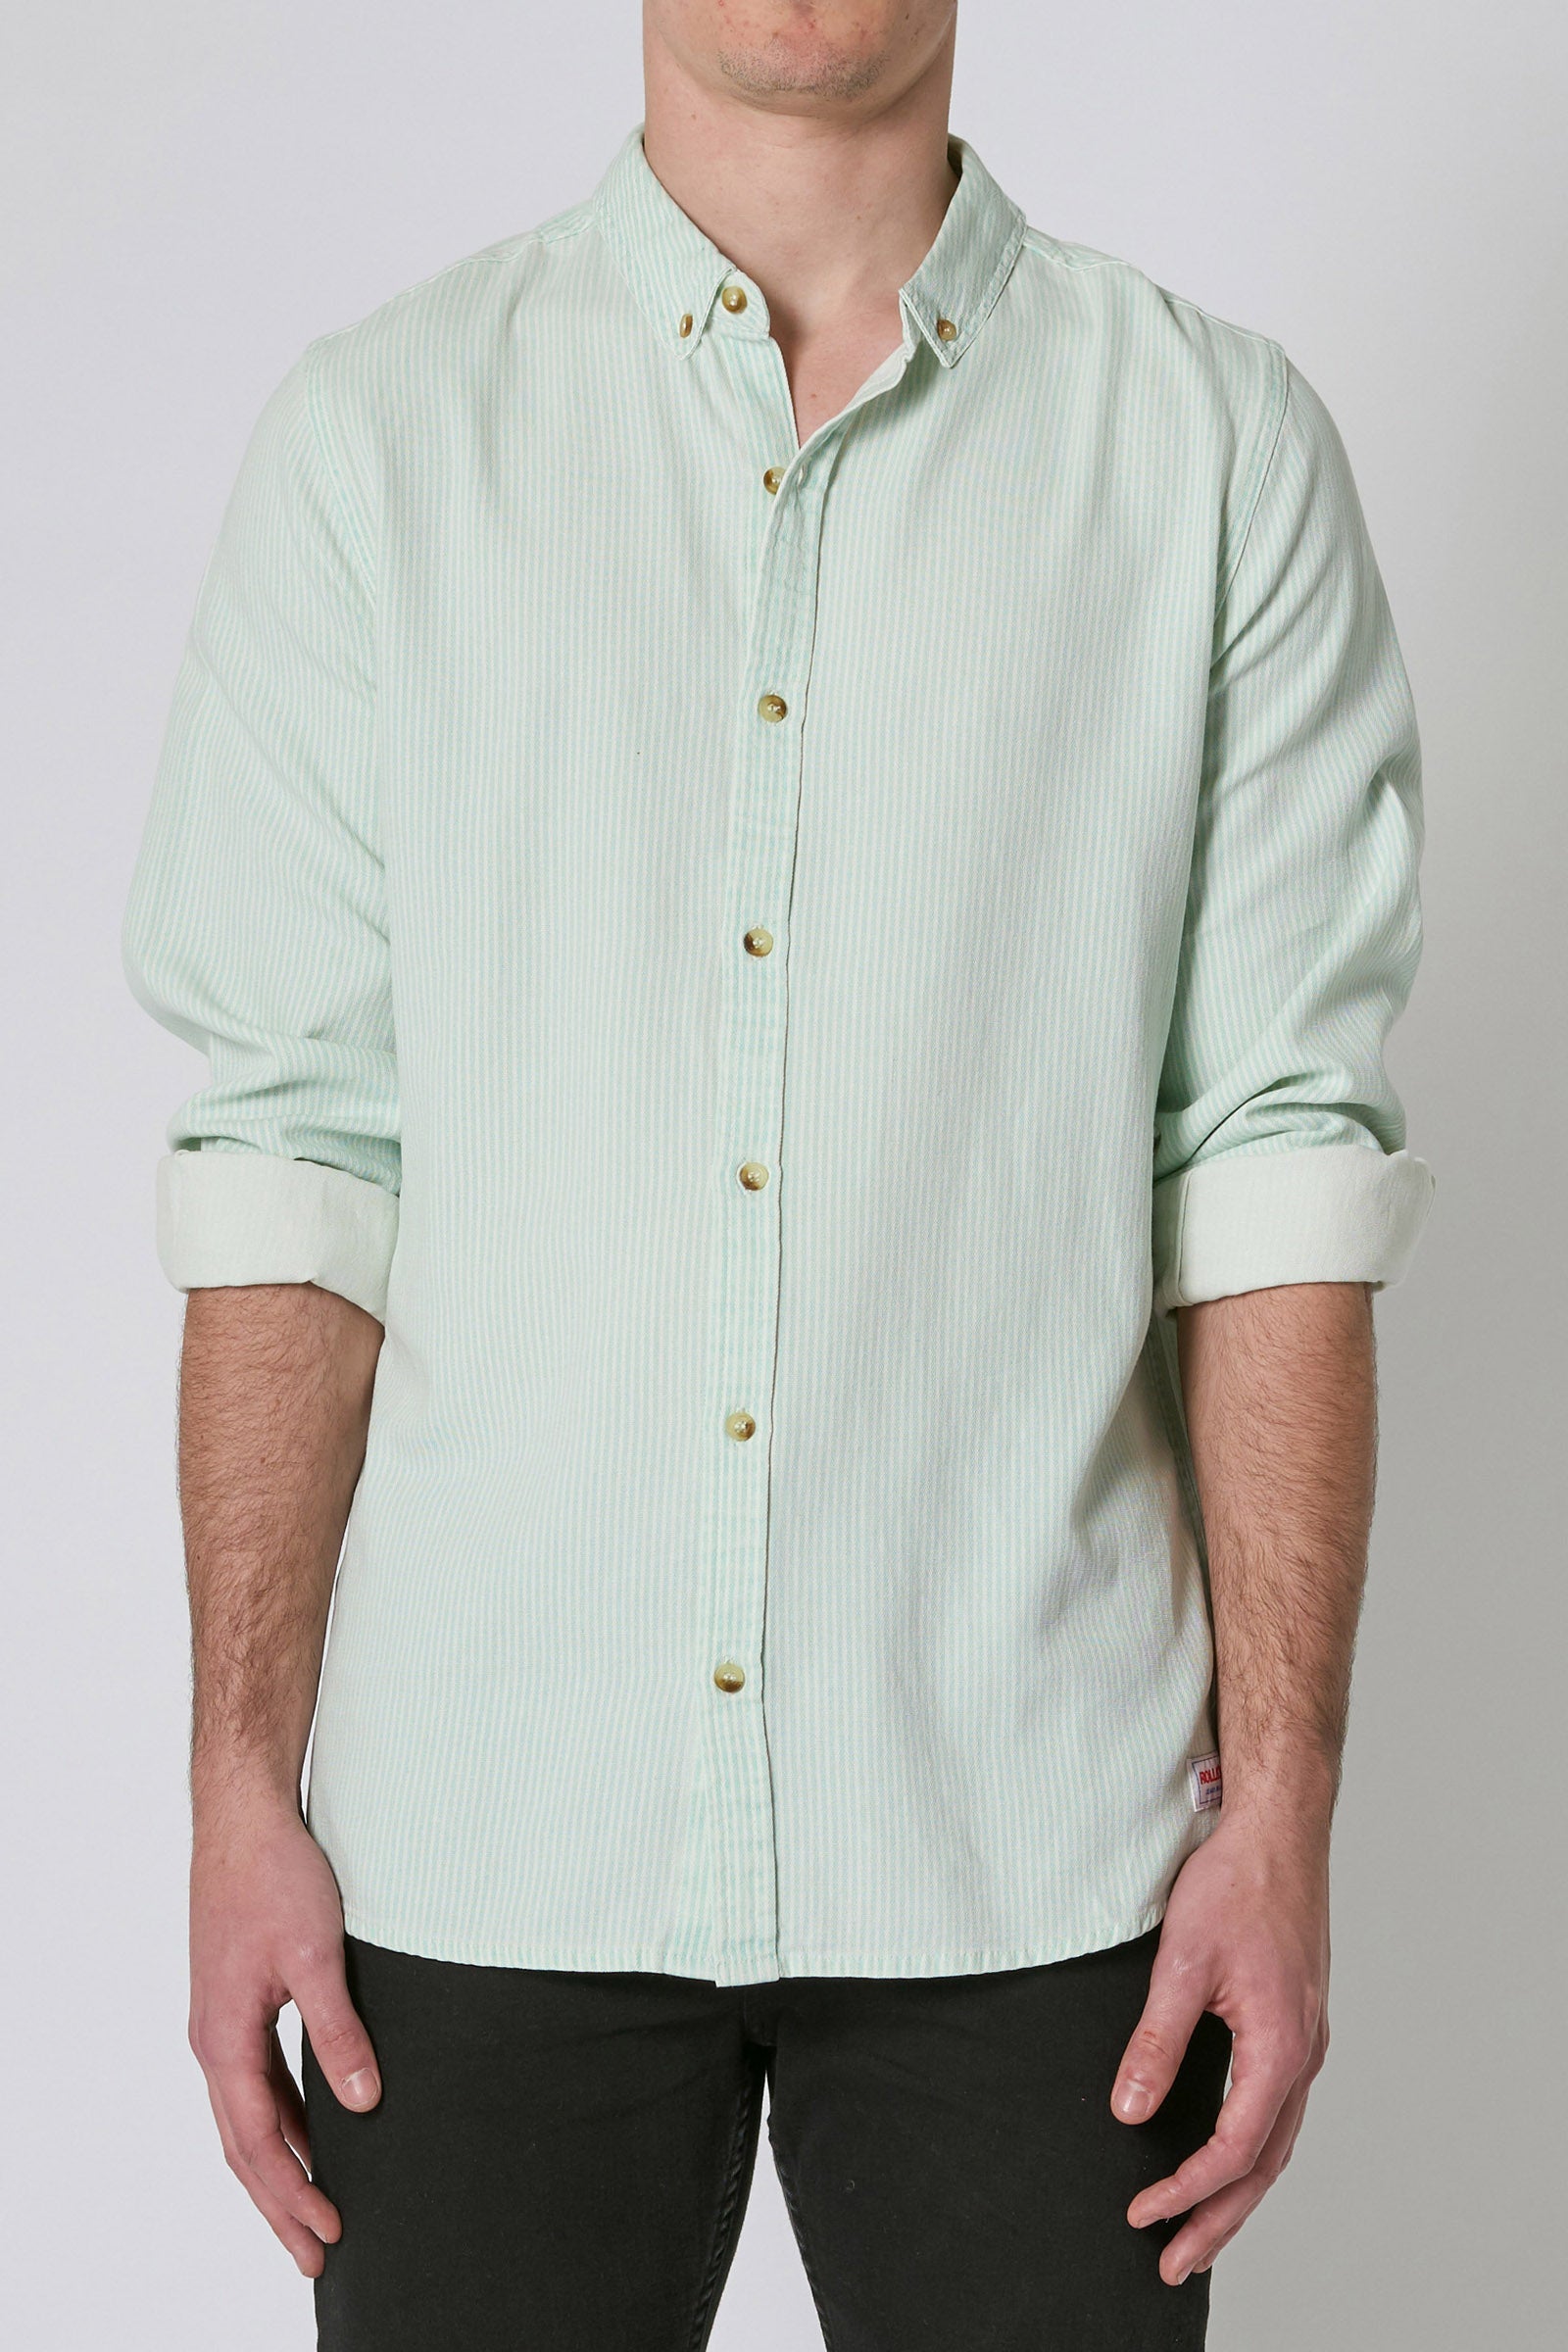 Buy Men At Work Stripe Oxford Shirt - Green Online | Rollas Jeans